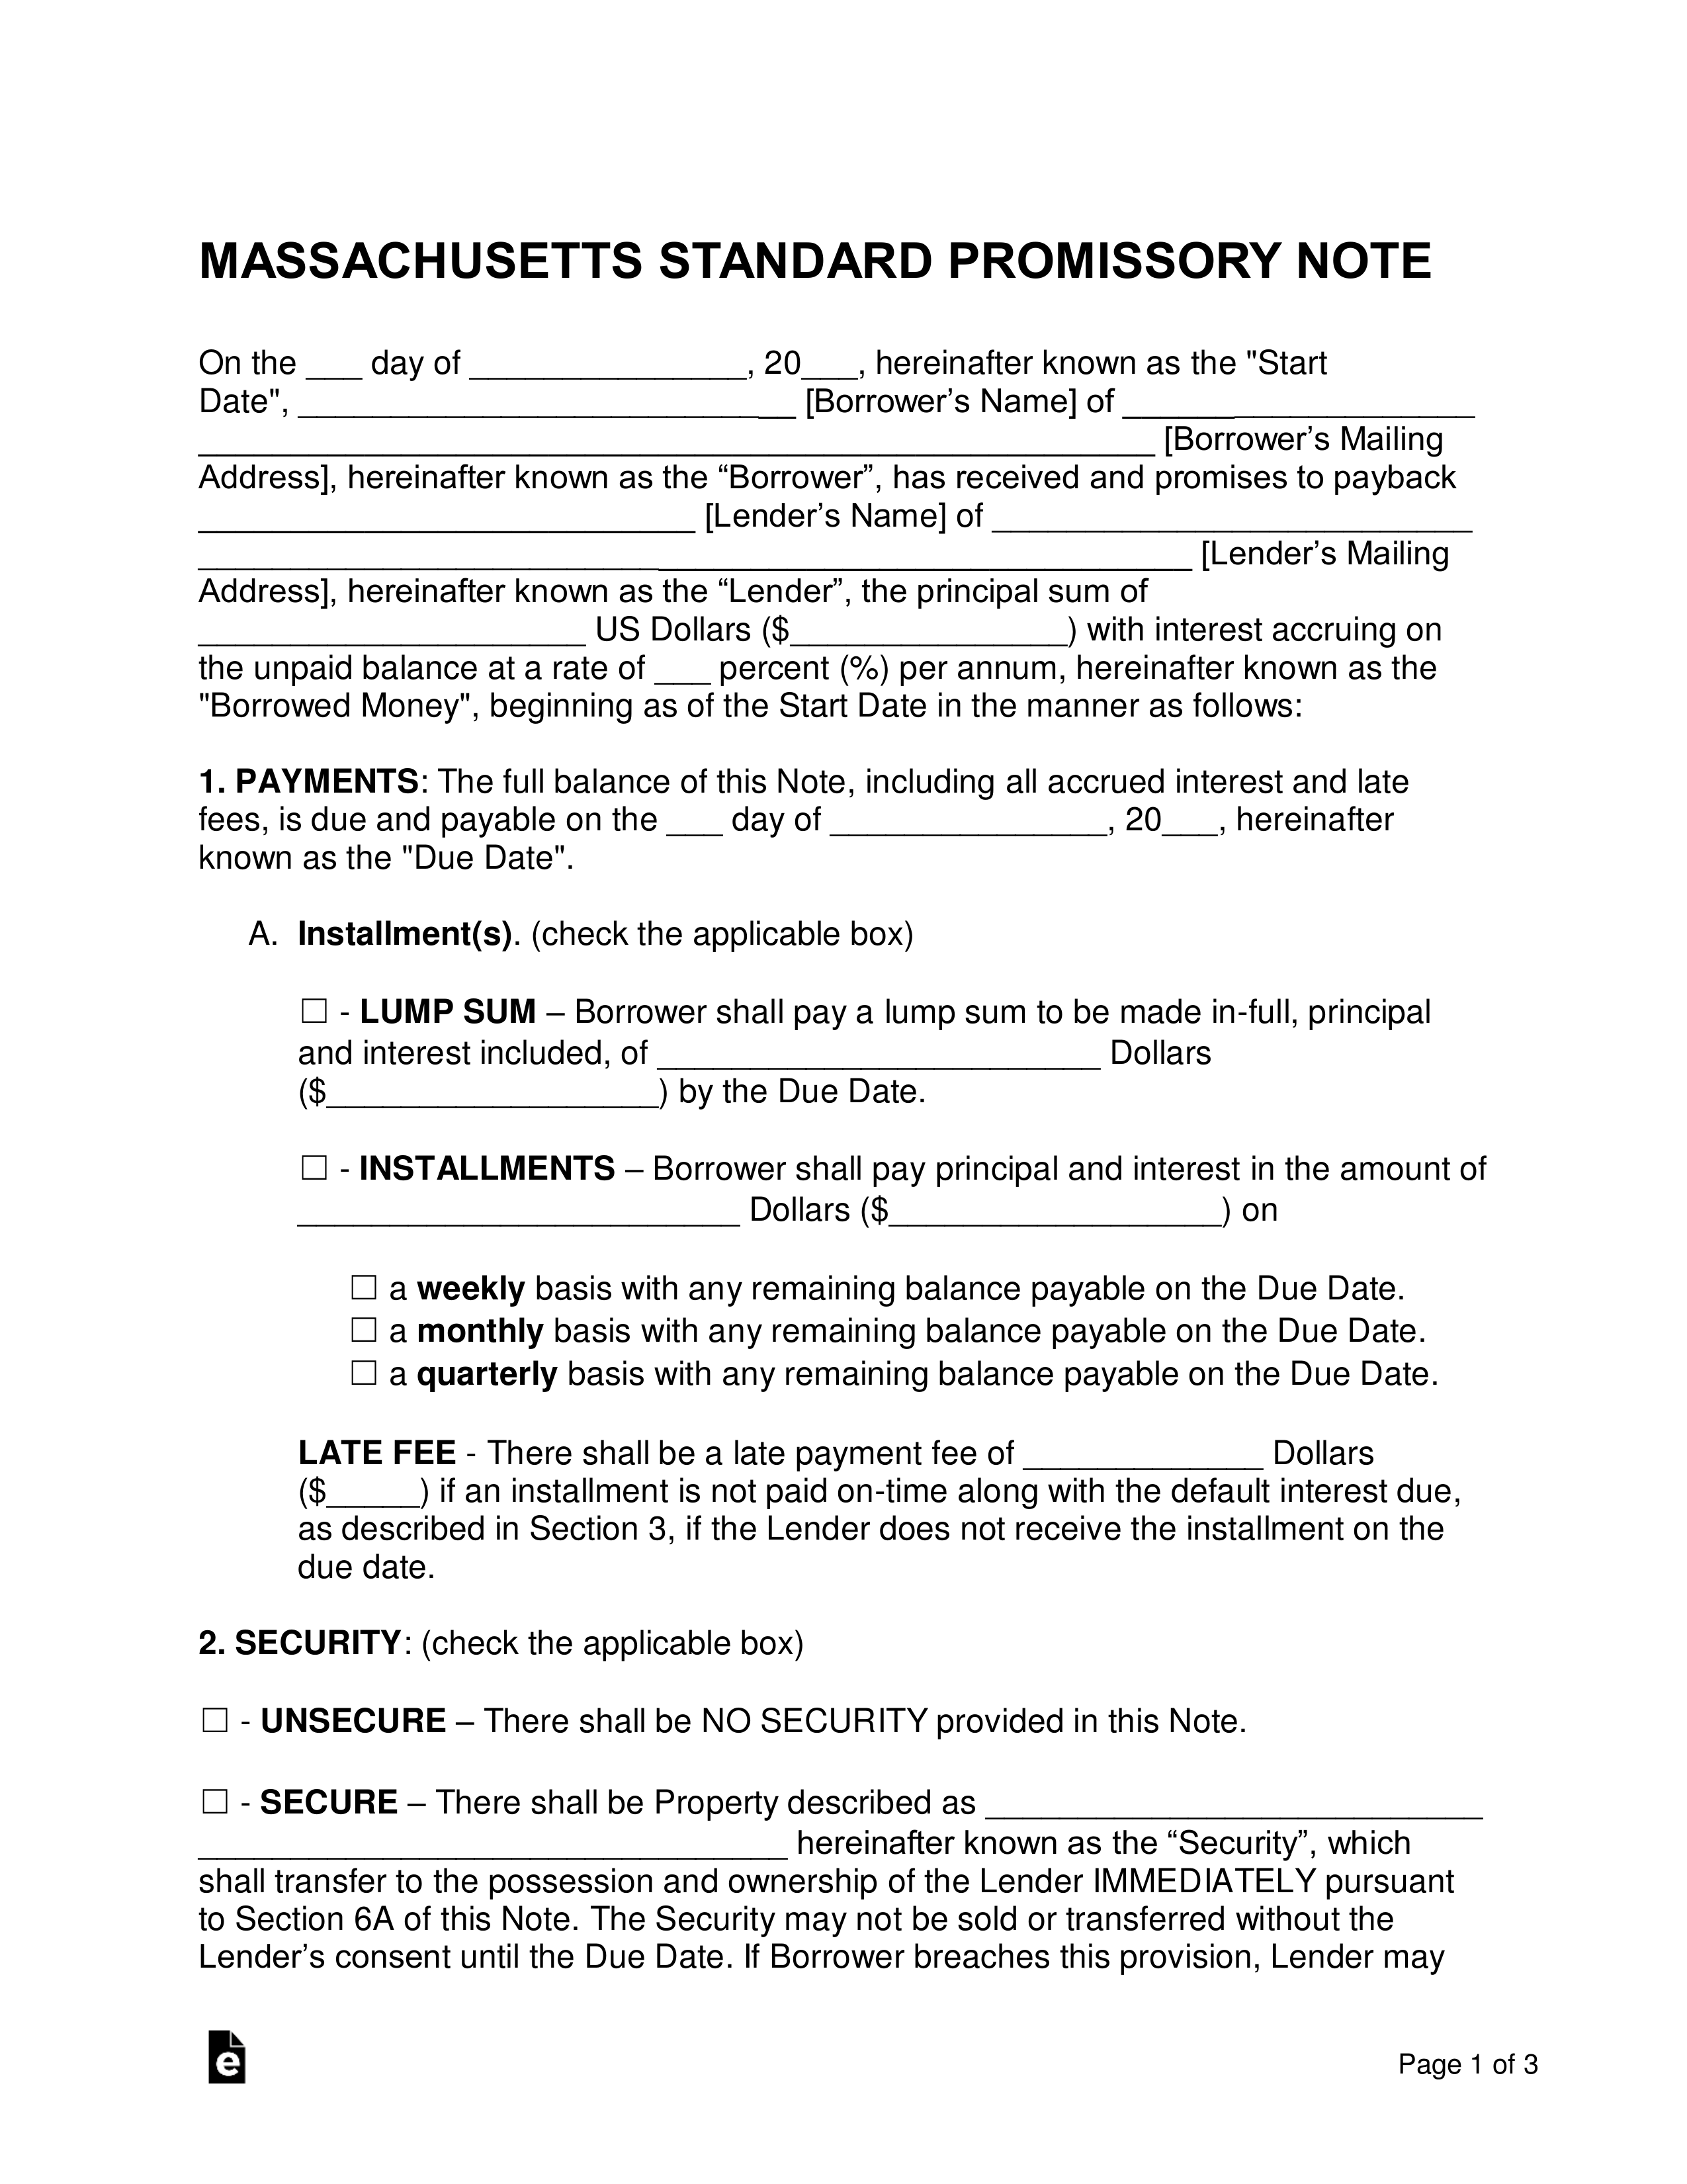 Massachusetts Promissory Note Templates (2)